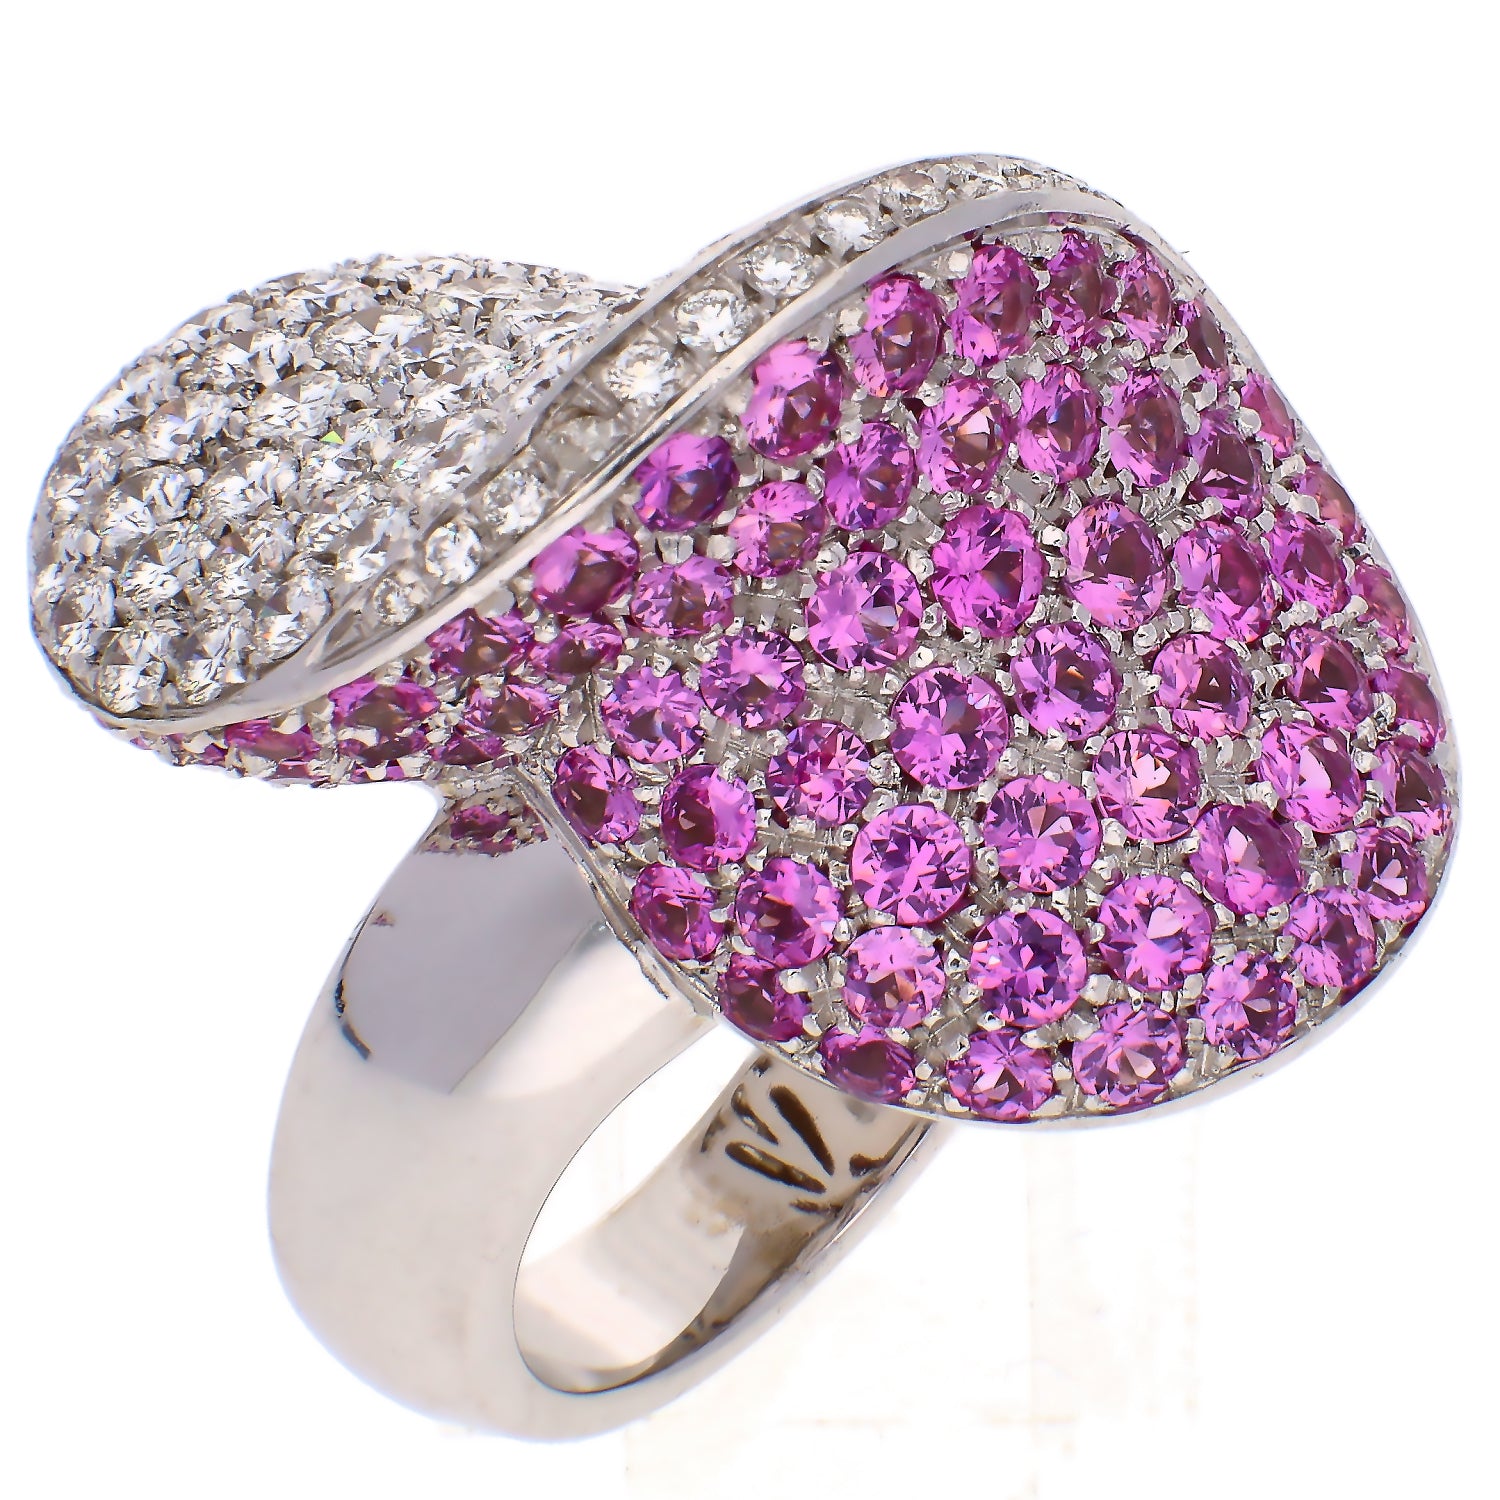 Leo Pizzo Design 18K White Gold Diamond and Sapphire Ring